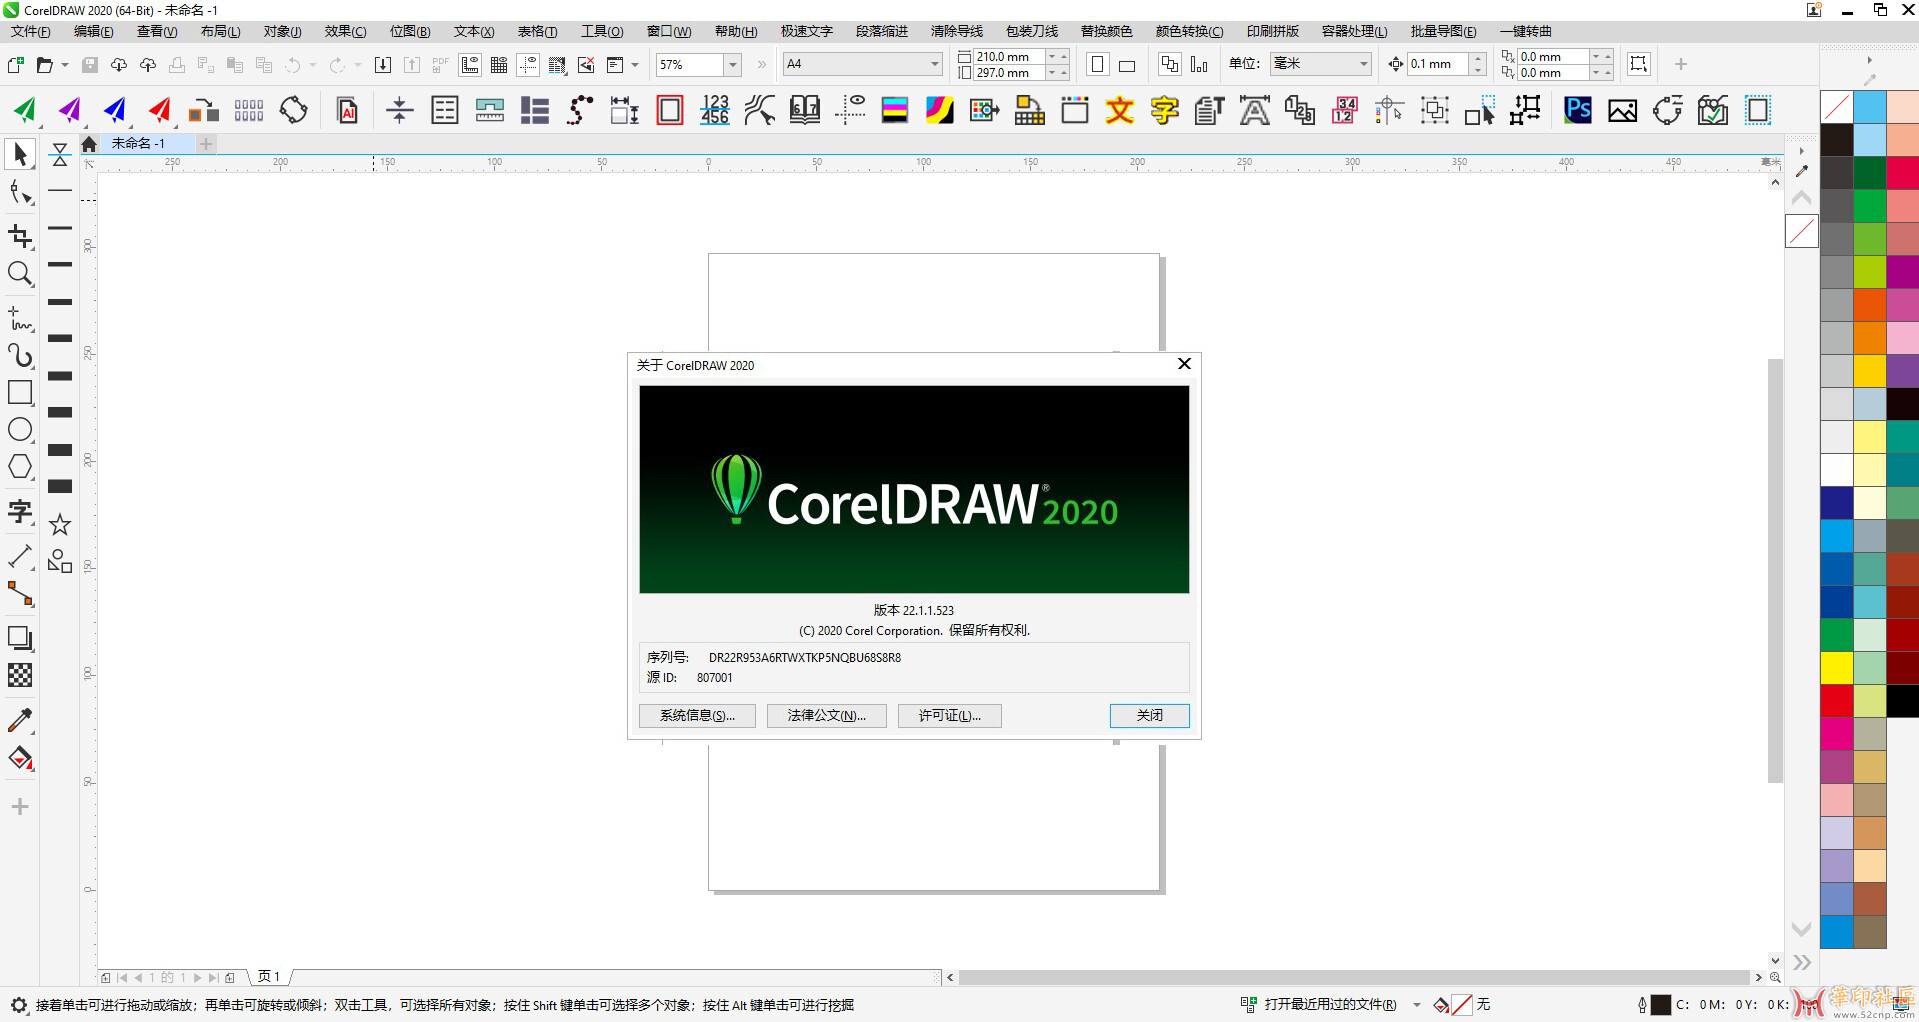 CorelDRAW 2020 工作区界面